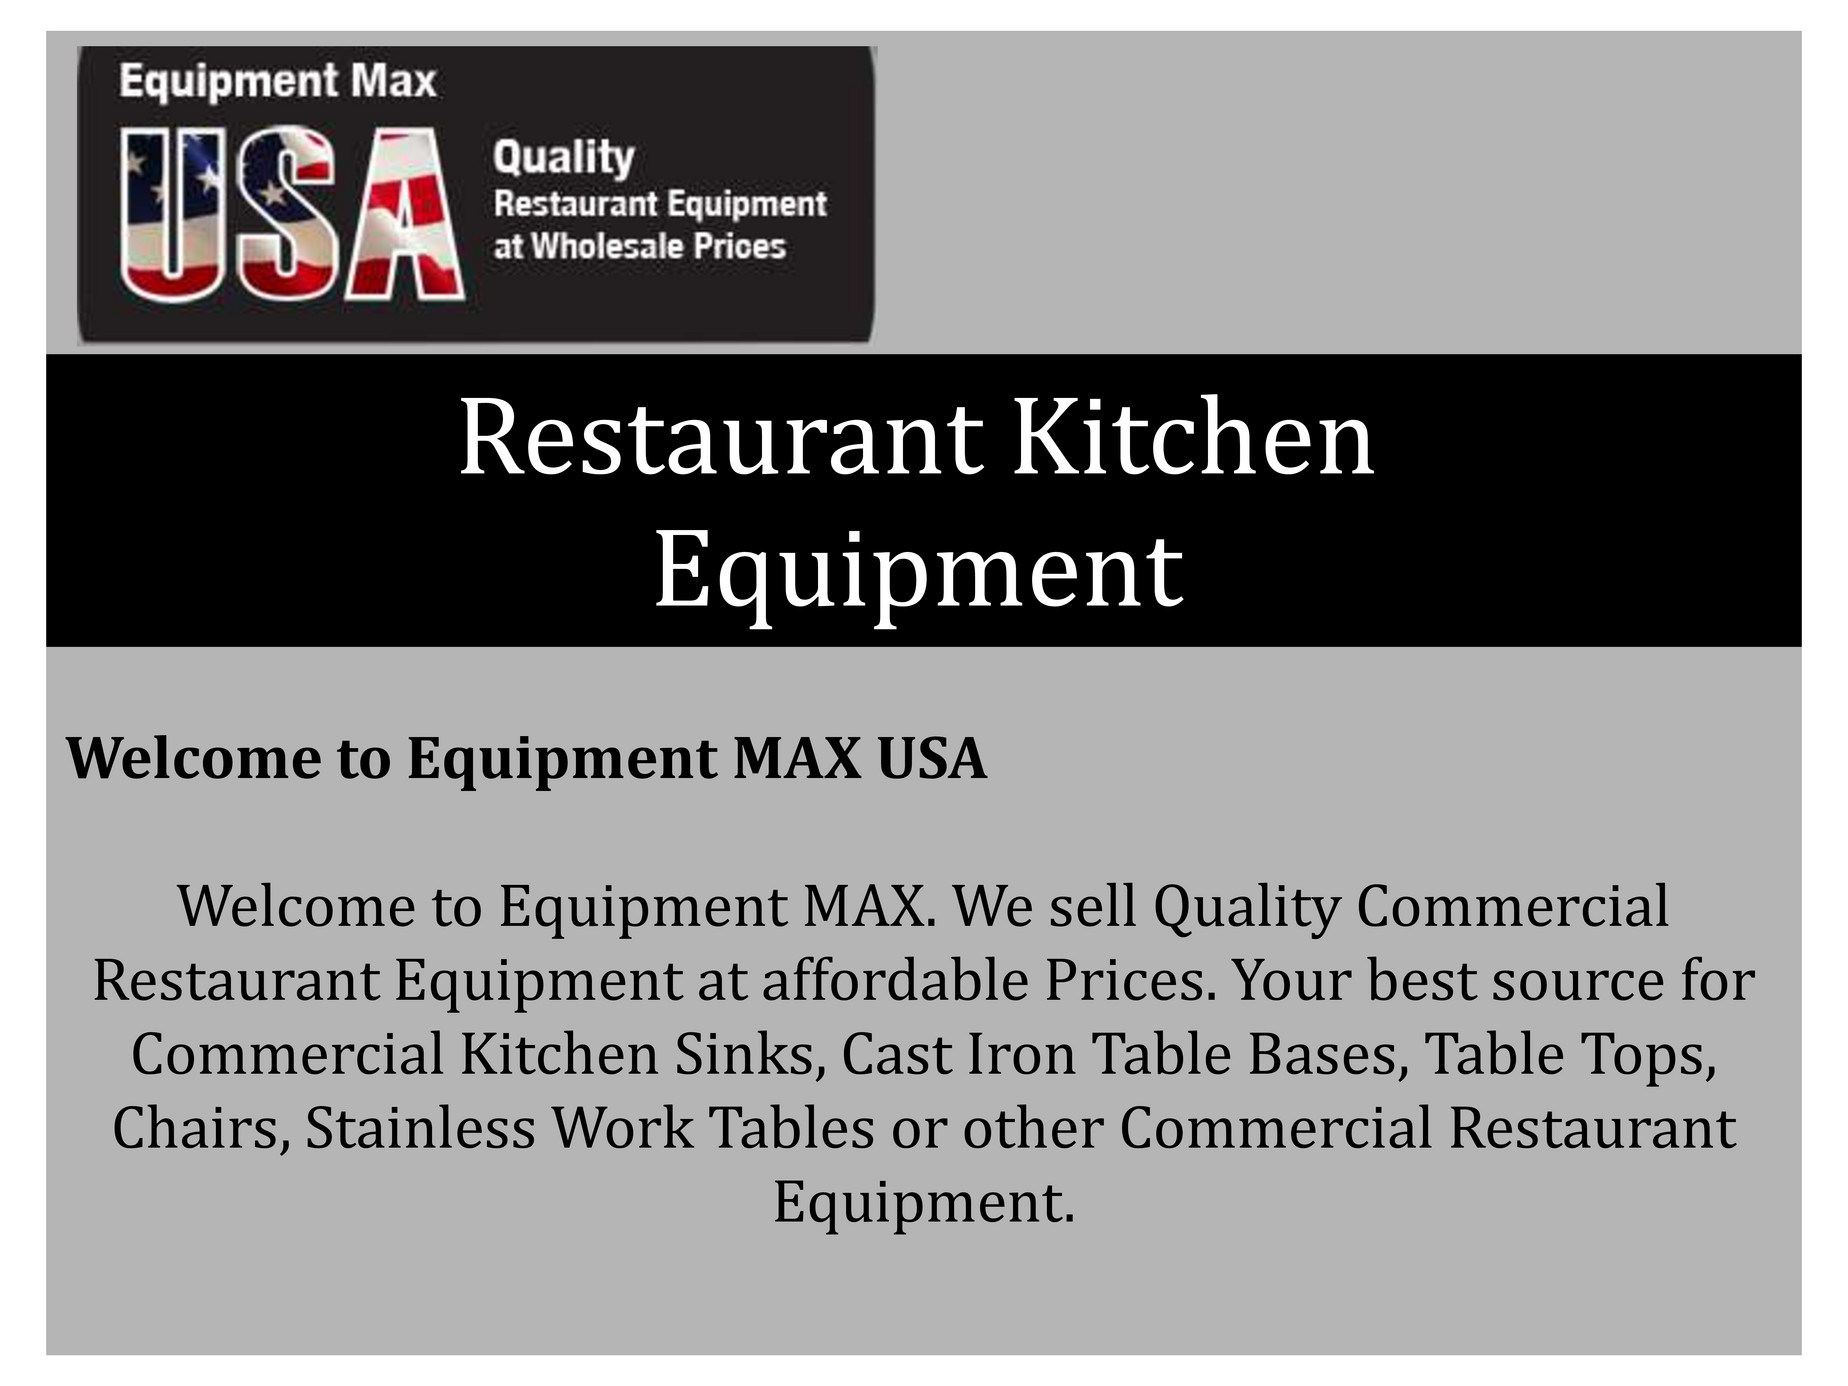 equipmentmaxusa - Restaurant Kitchen Equipment - Page 1 - Created